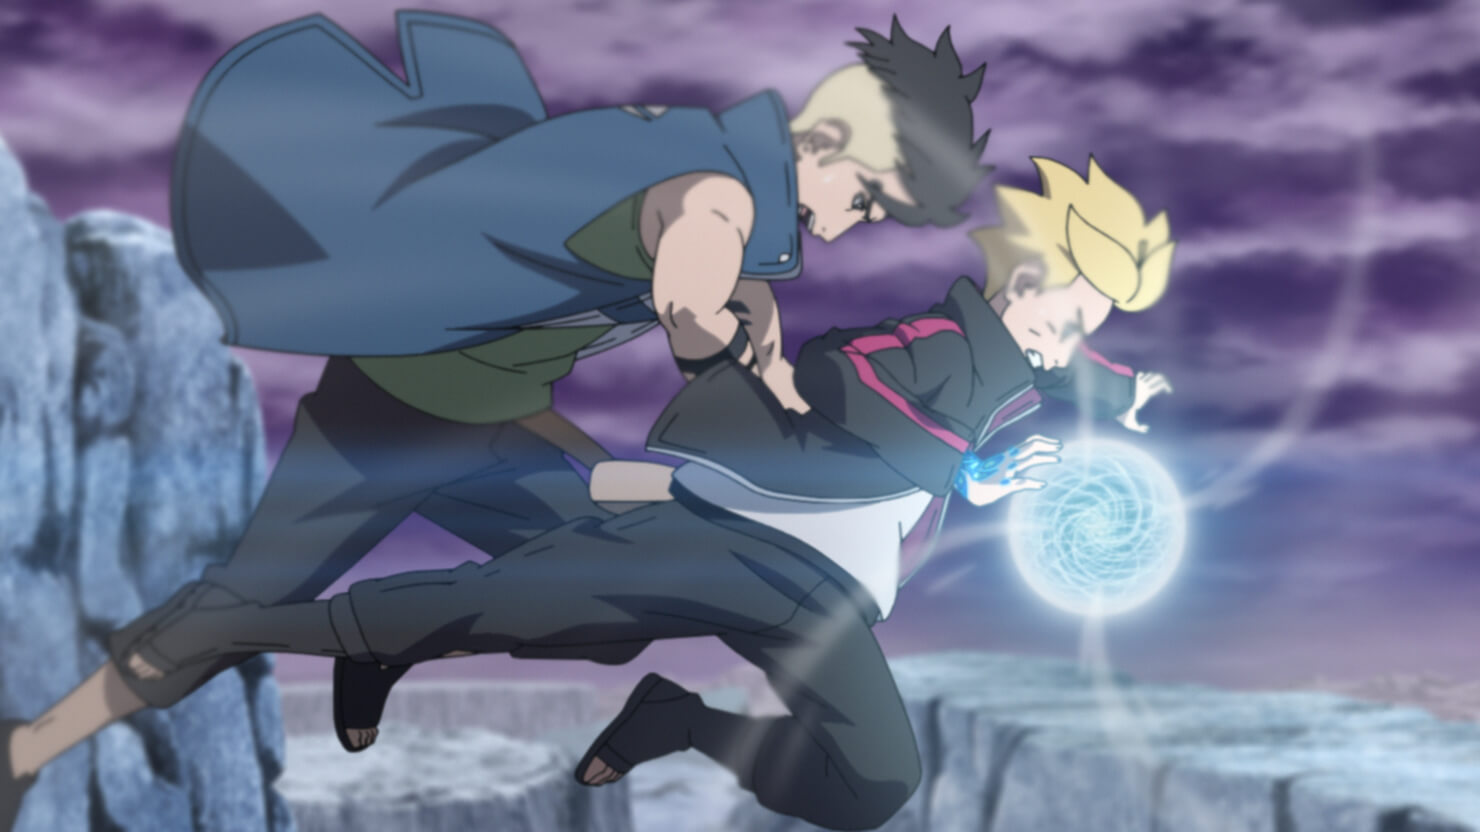 Official Trailer  Boruto: Naruto Next Generations - The Otsutsuki